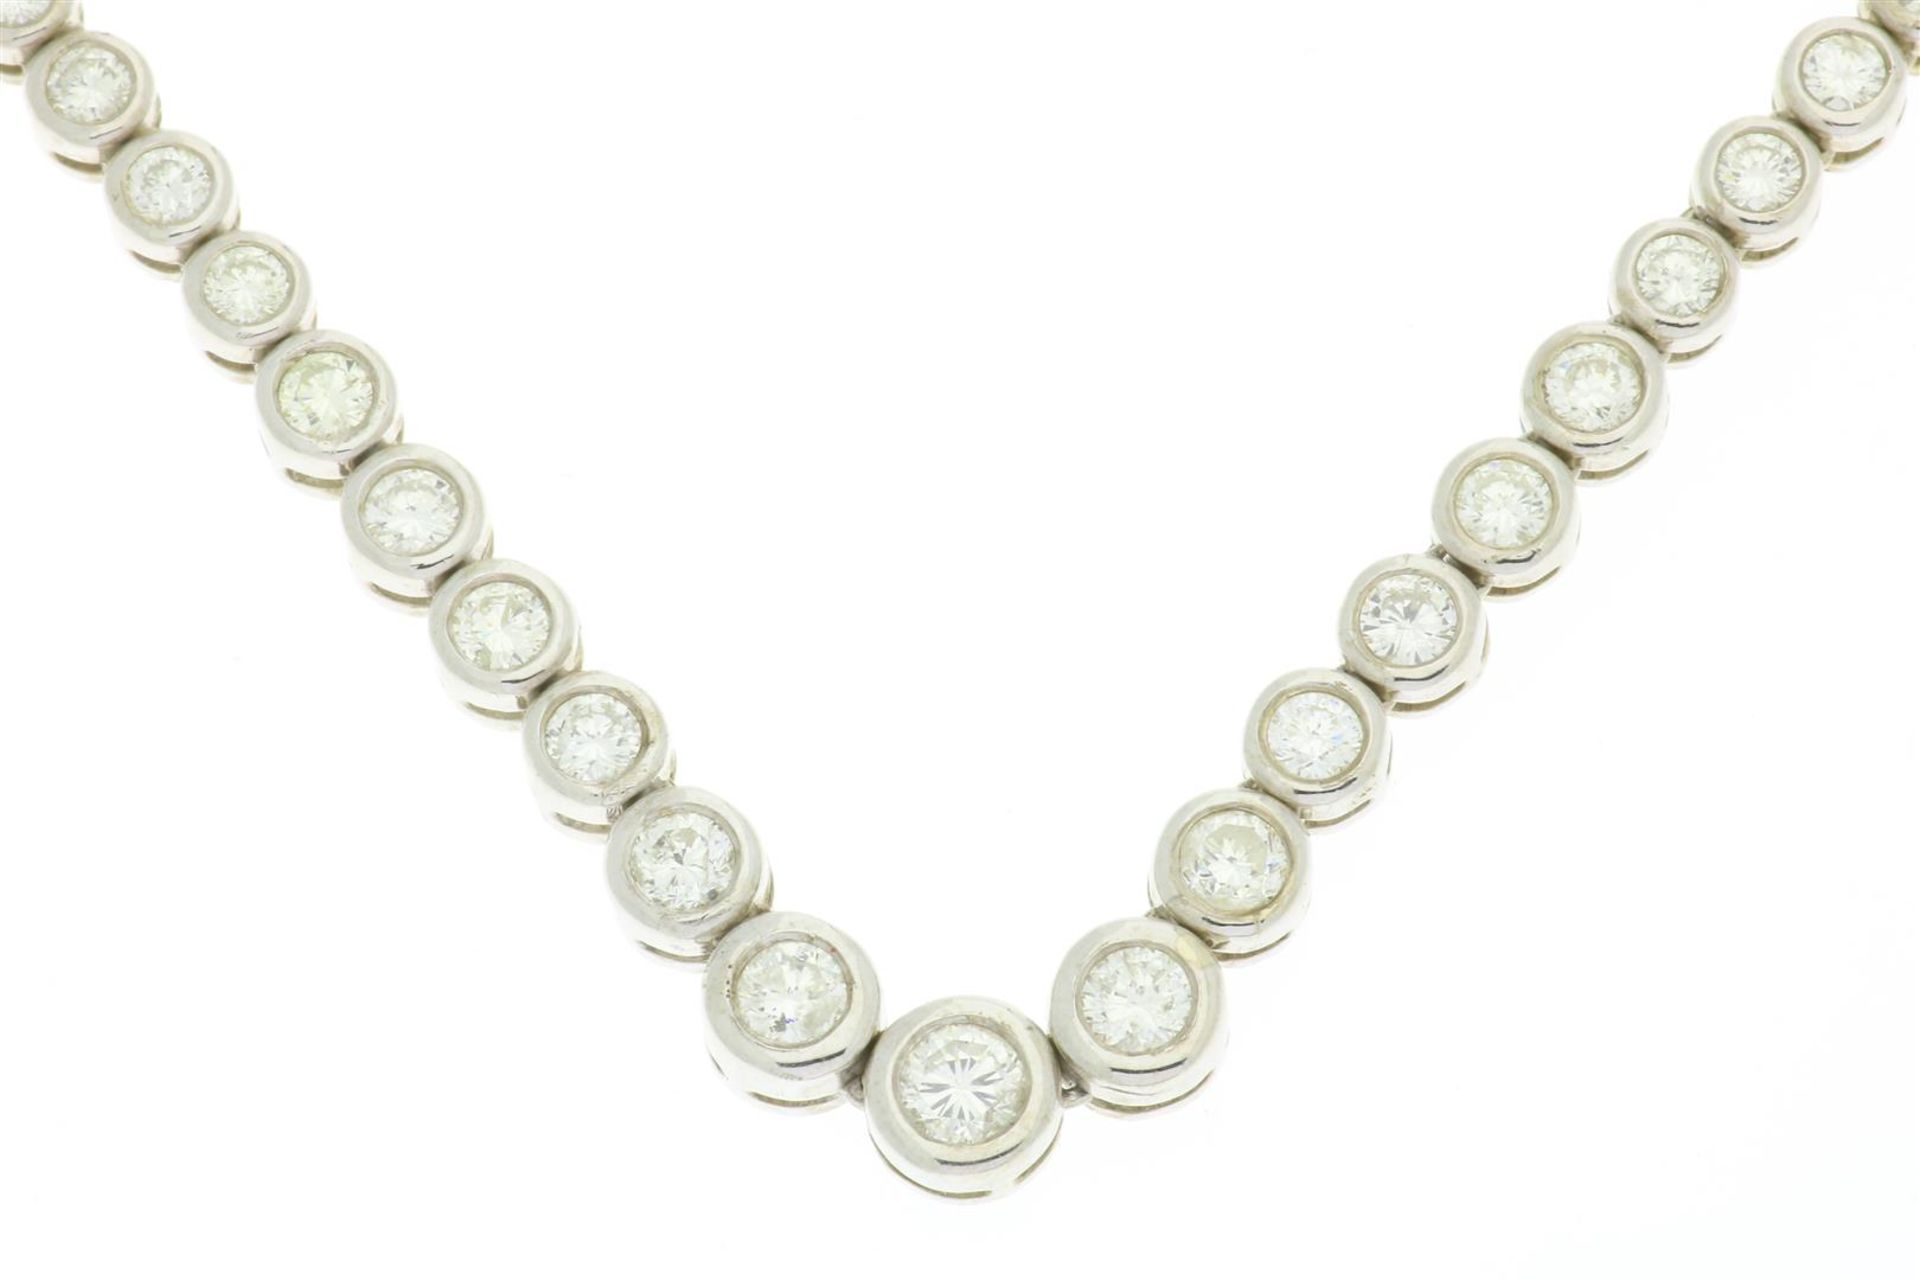 White gold tennis necklace set with diamond